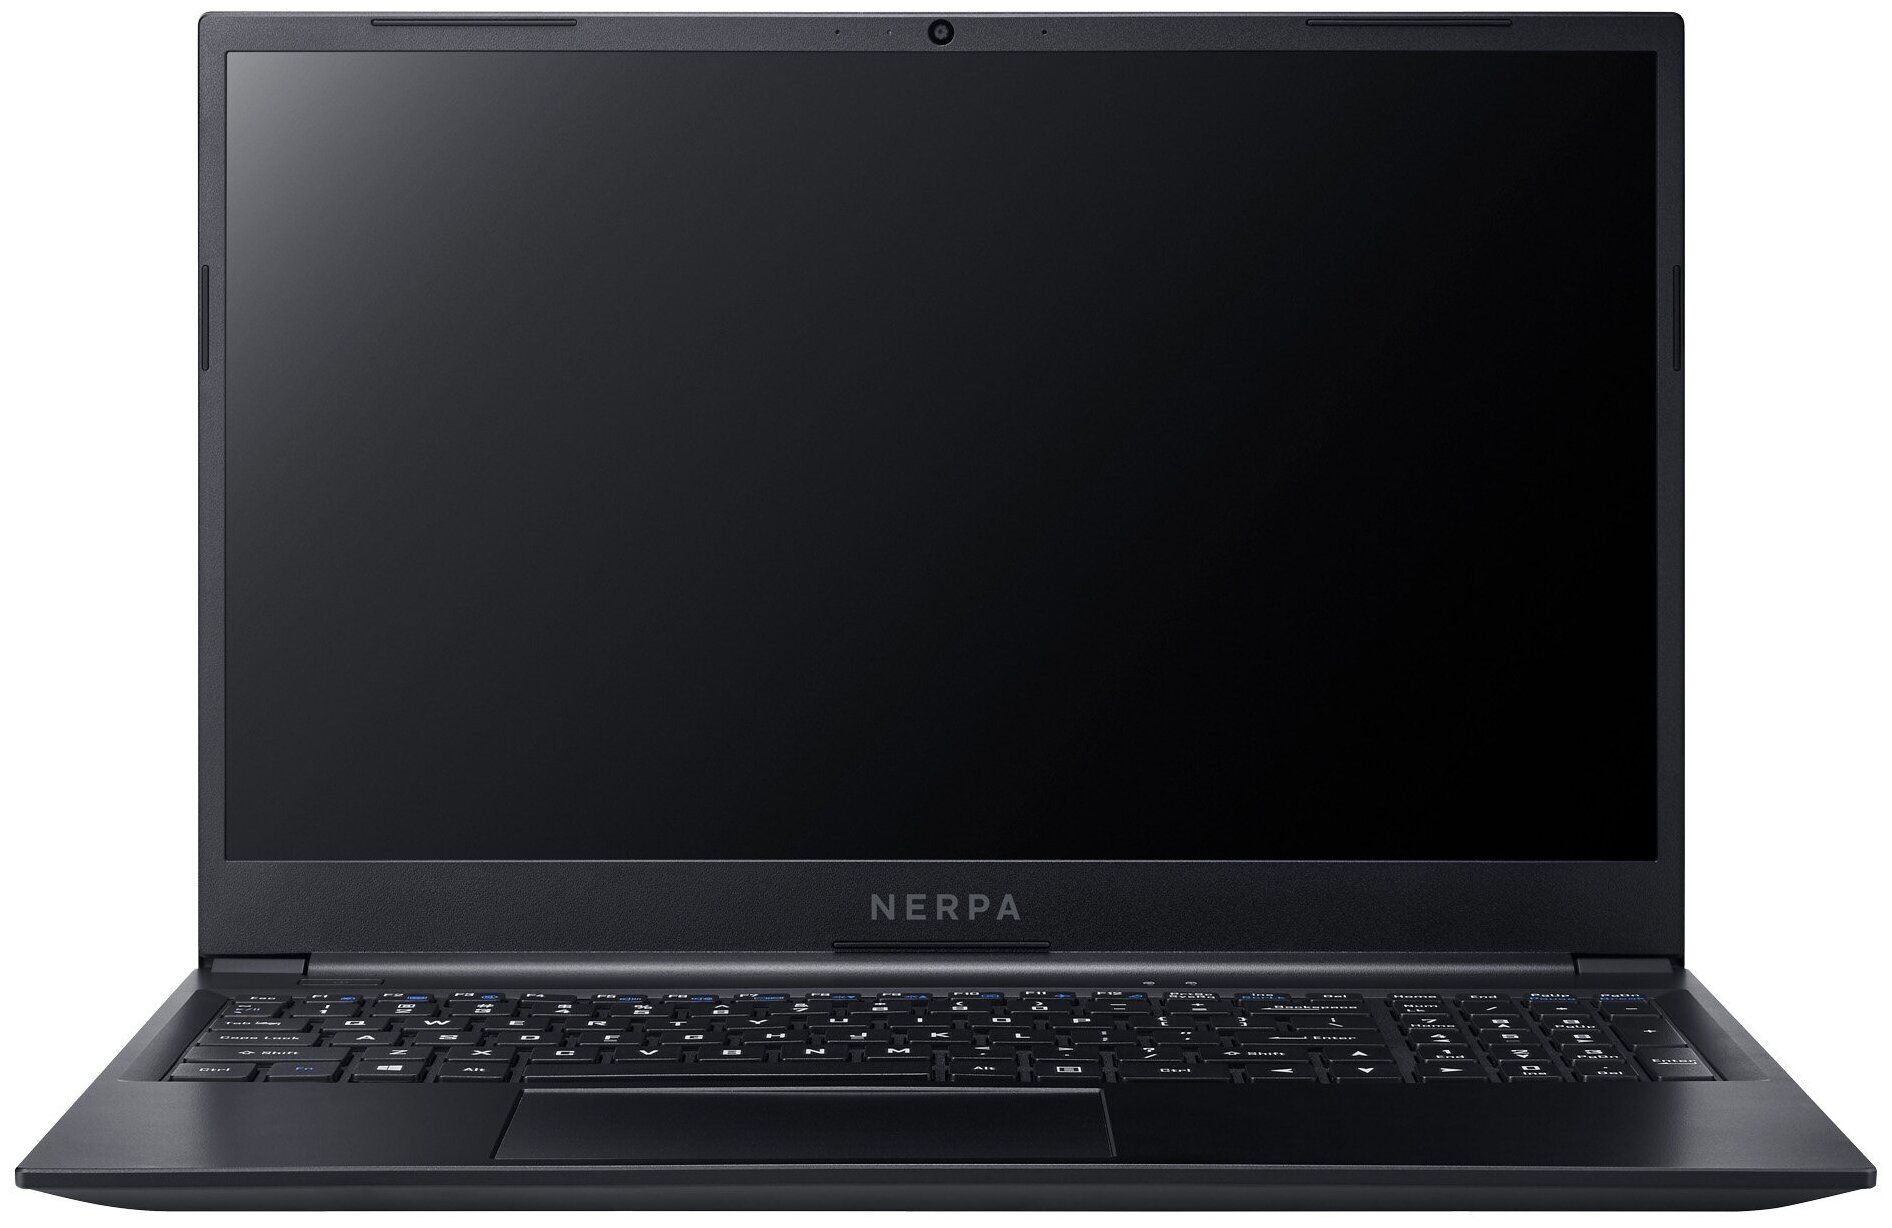 Ноутбук Nerpa Caspica A552-15 15.6 Titanium Black (A552-15AA082500K) ноутбук nerpa caspica a752 15 15 6 titanium gray titanium black a752 15ac162601g